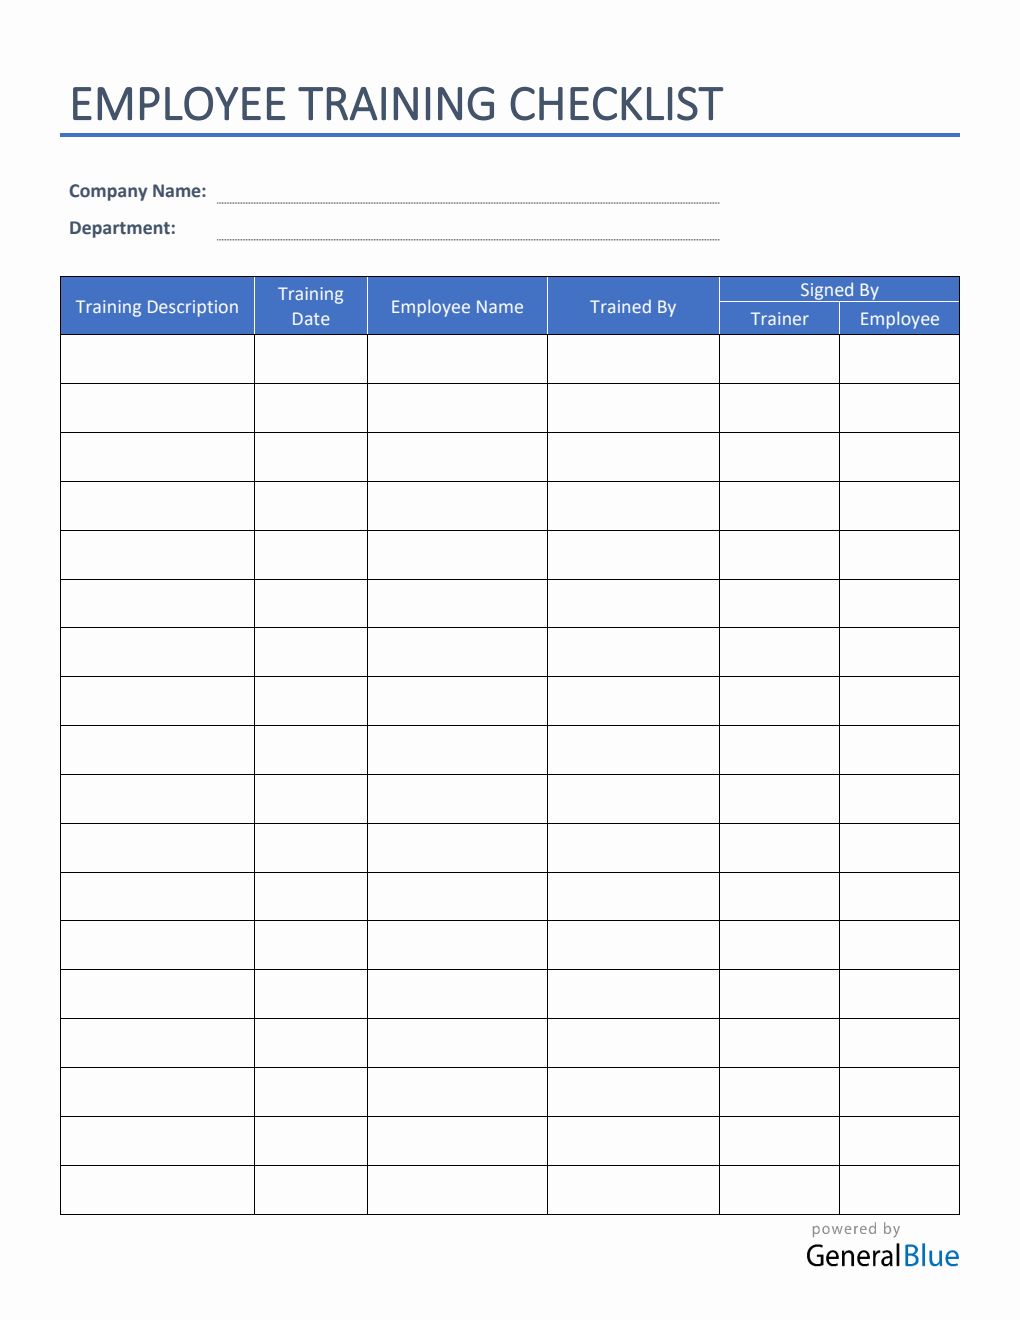 Employee Training Checklist in PDF